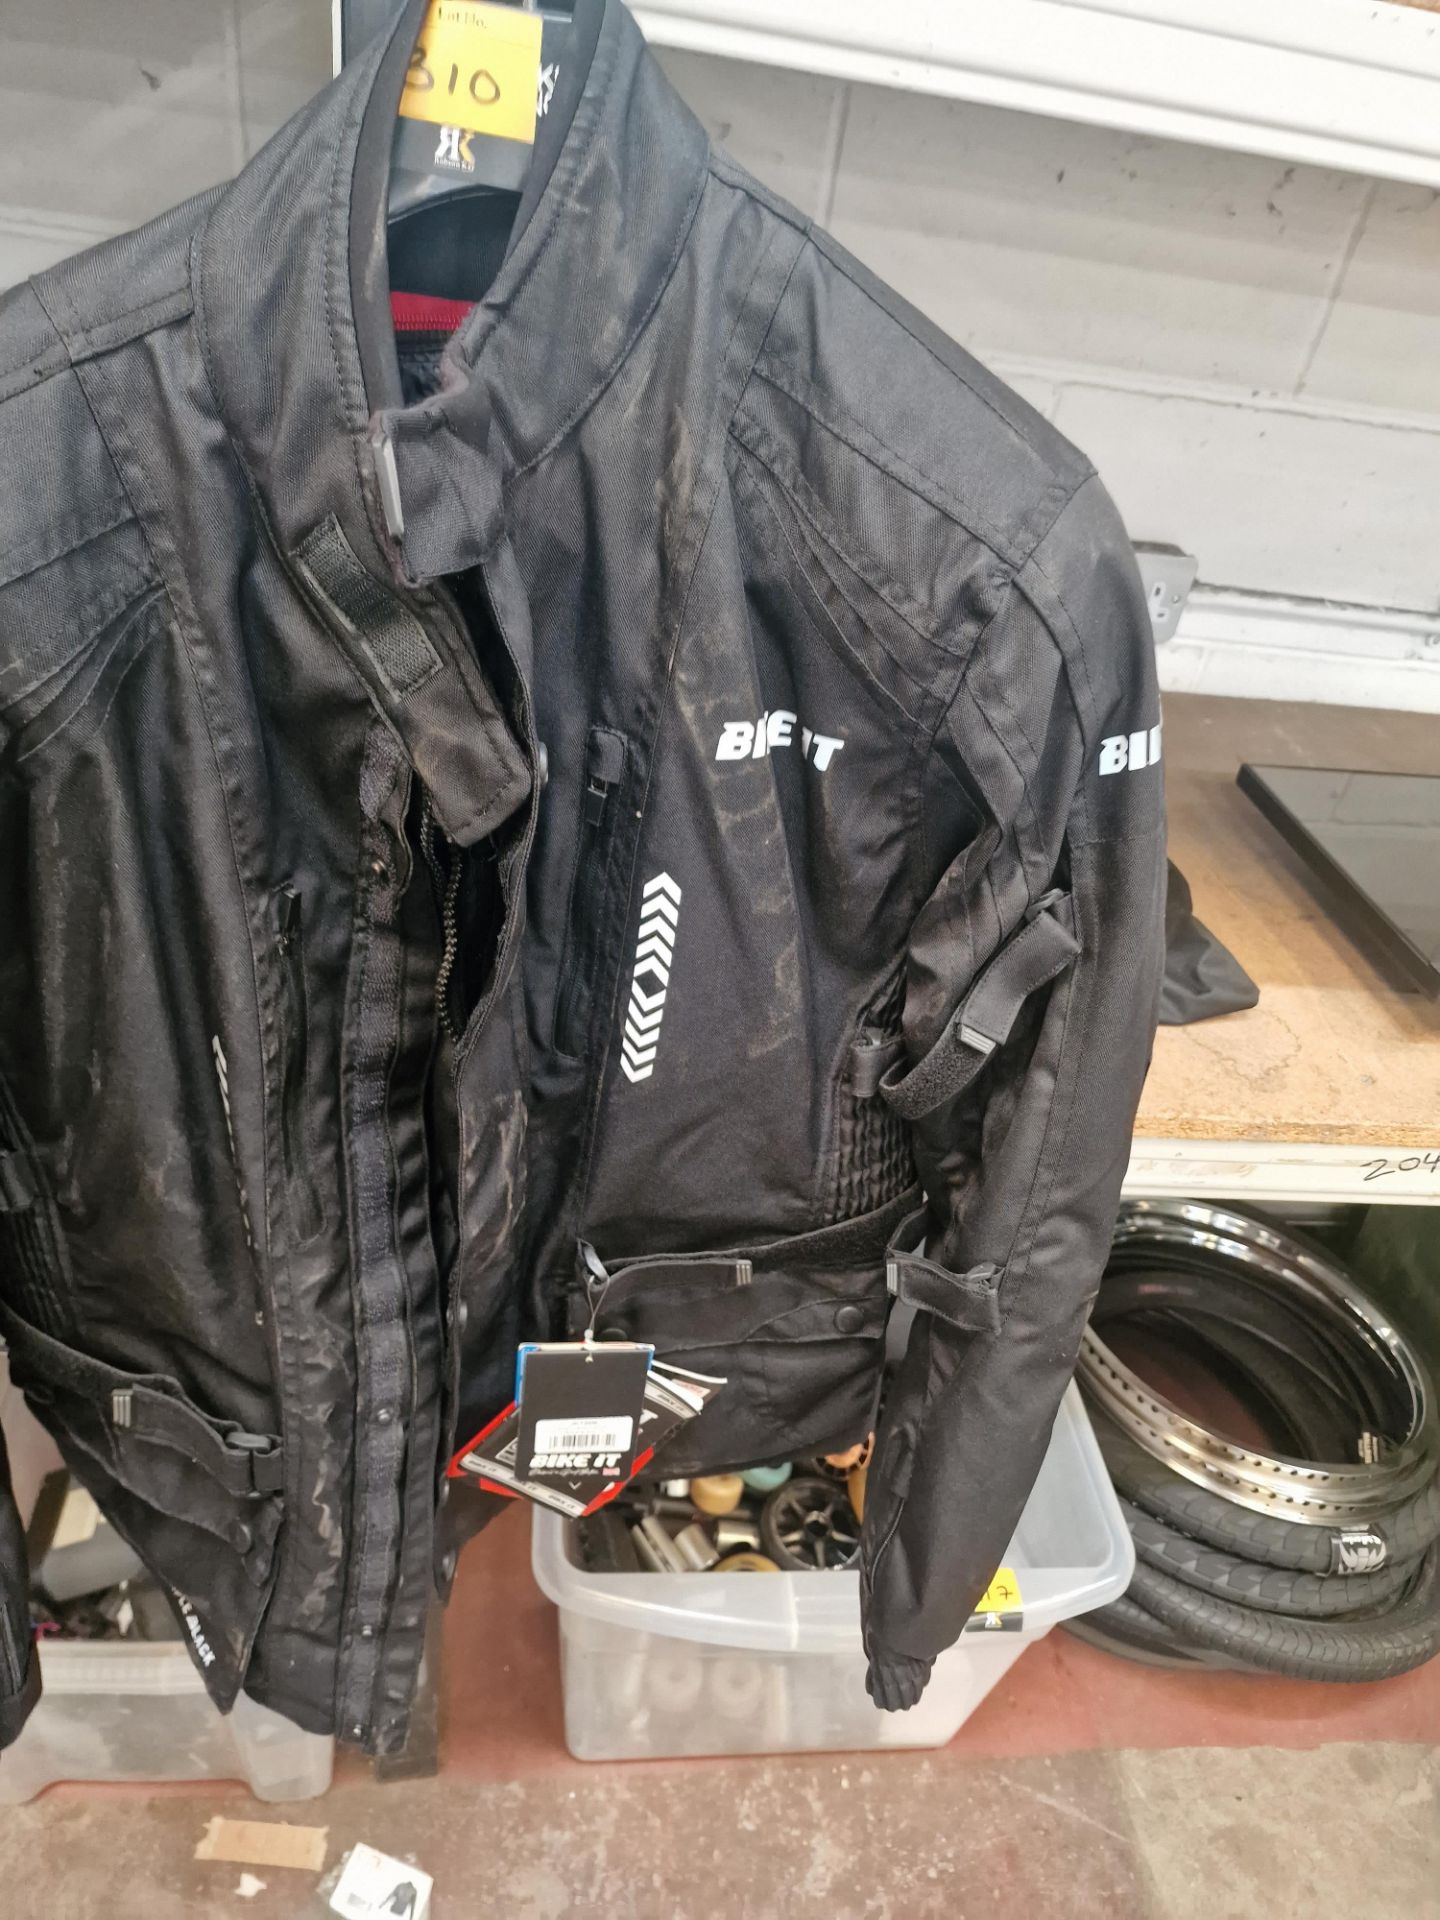 Bike It road jacket in triple black, size medium - Image 2 of 3